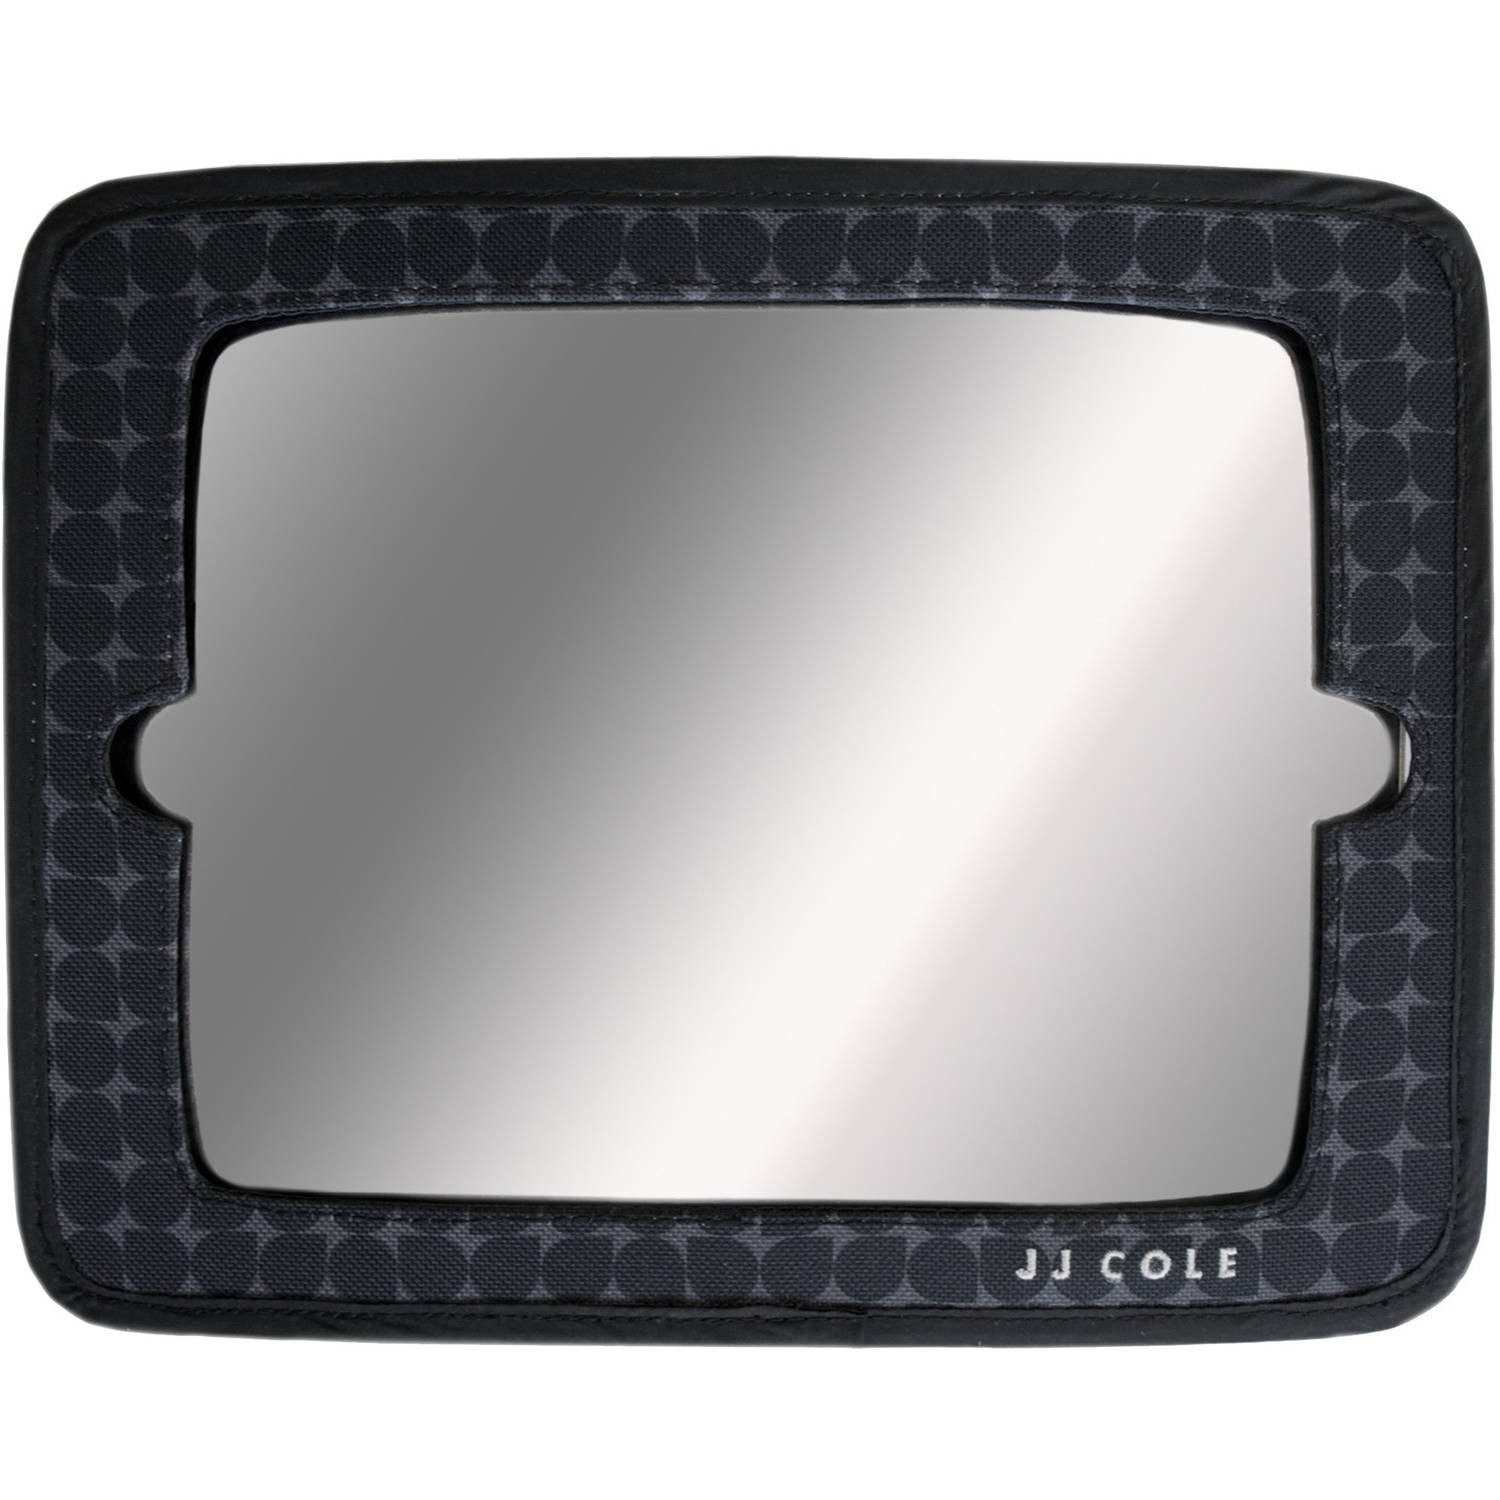 JJ Cole 2-en-1 Espejo de Plata de la Gota-614002003510-0